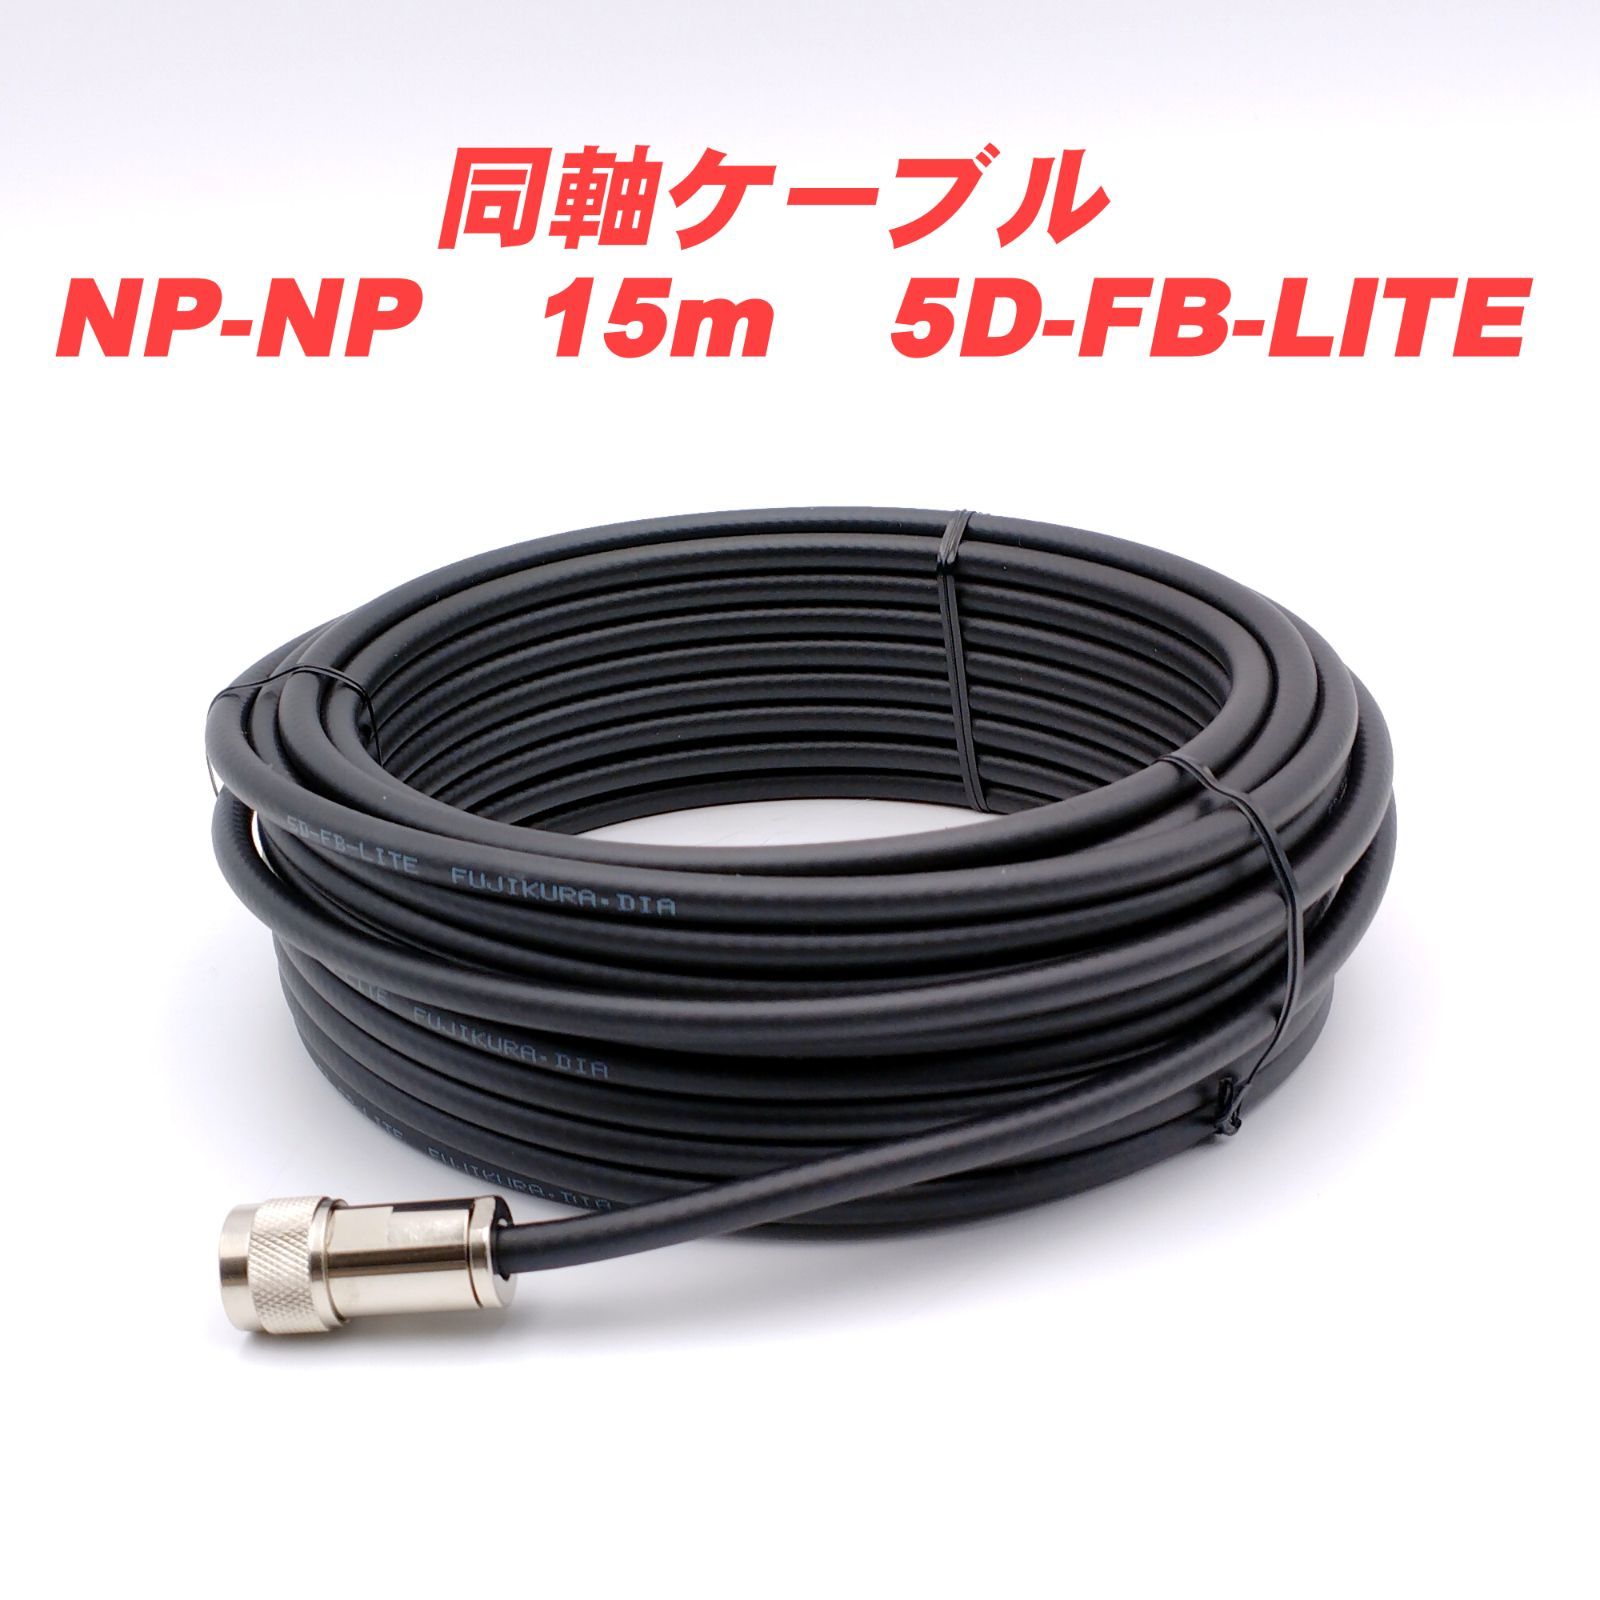 NP-NPコネクター付き同軸ケーブル 15m 5D-FB-LITE